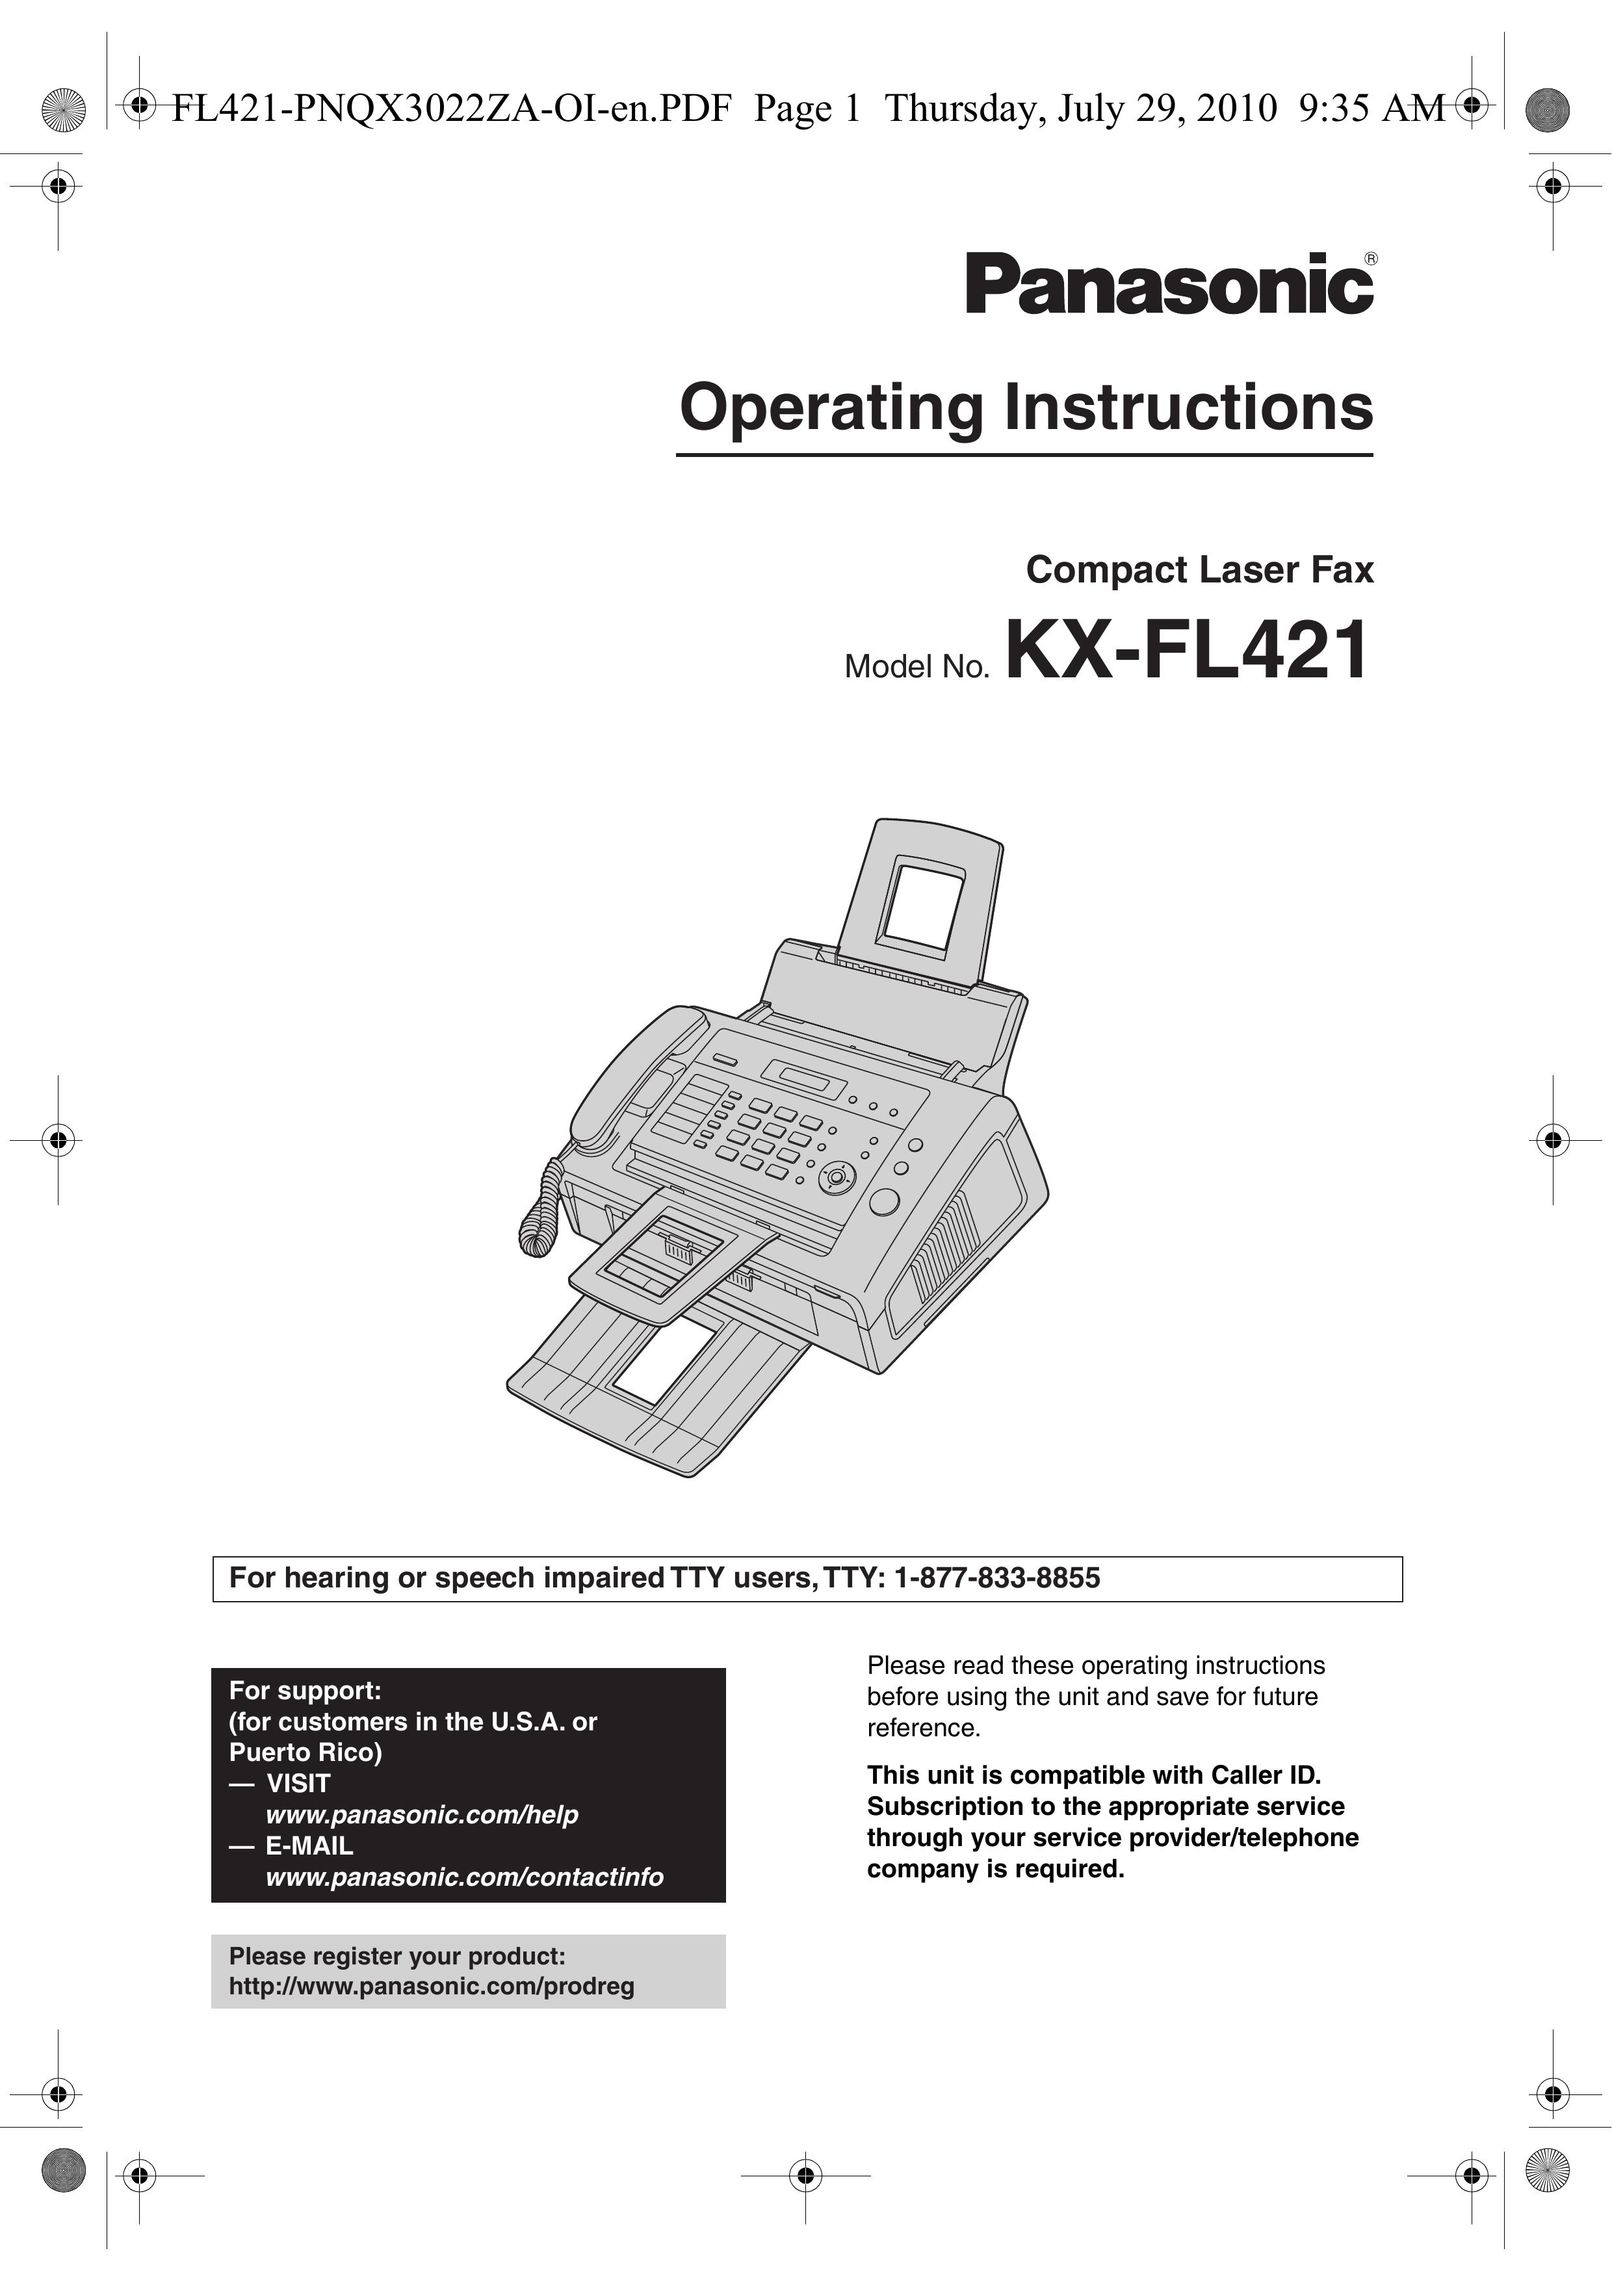 Panasonic KX-FL421 Fax Machine User Manual